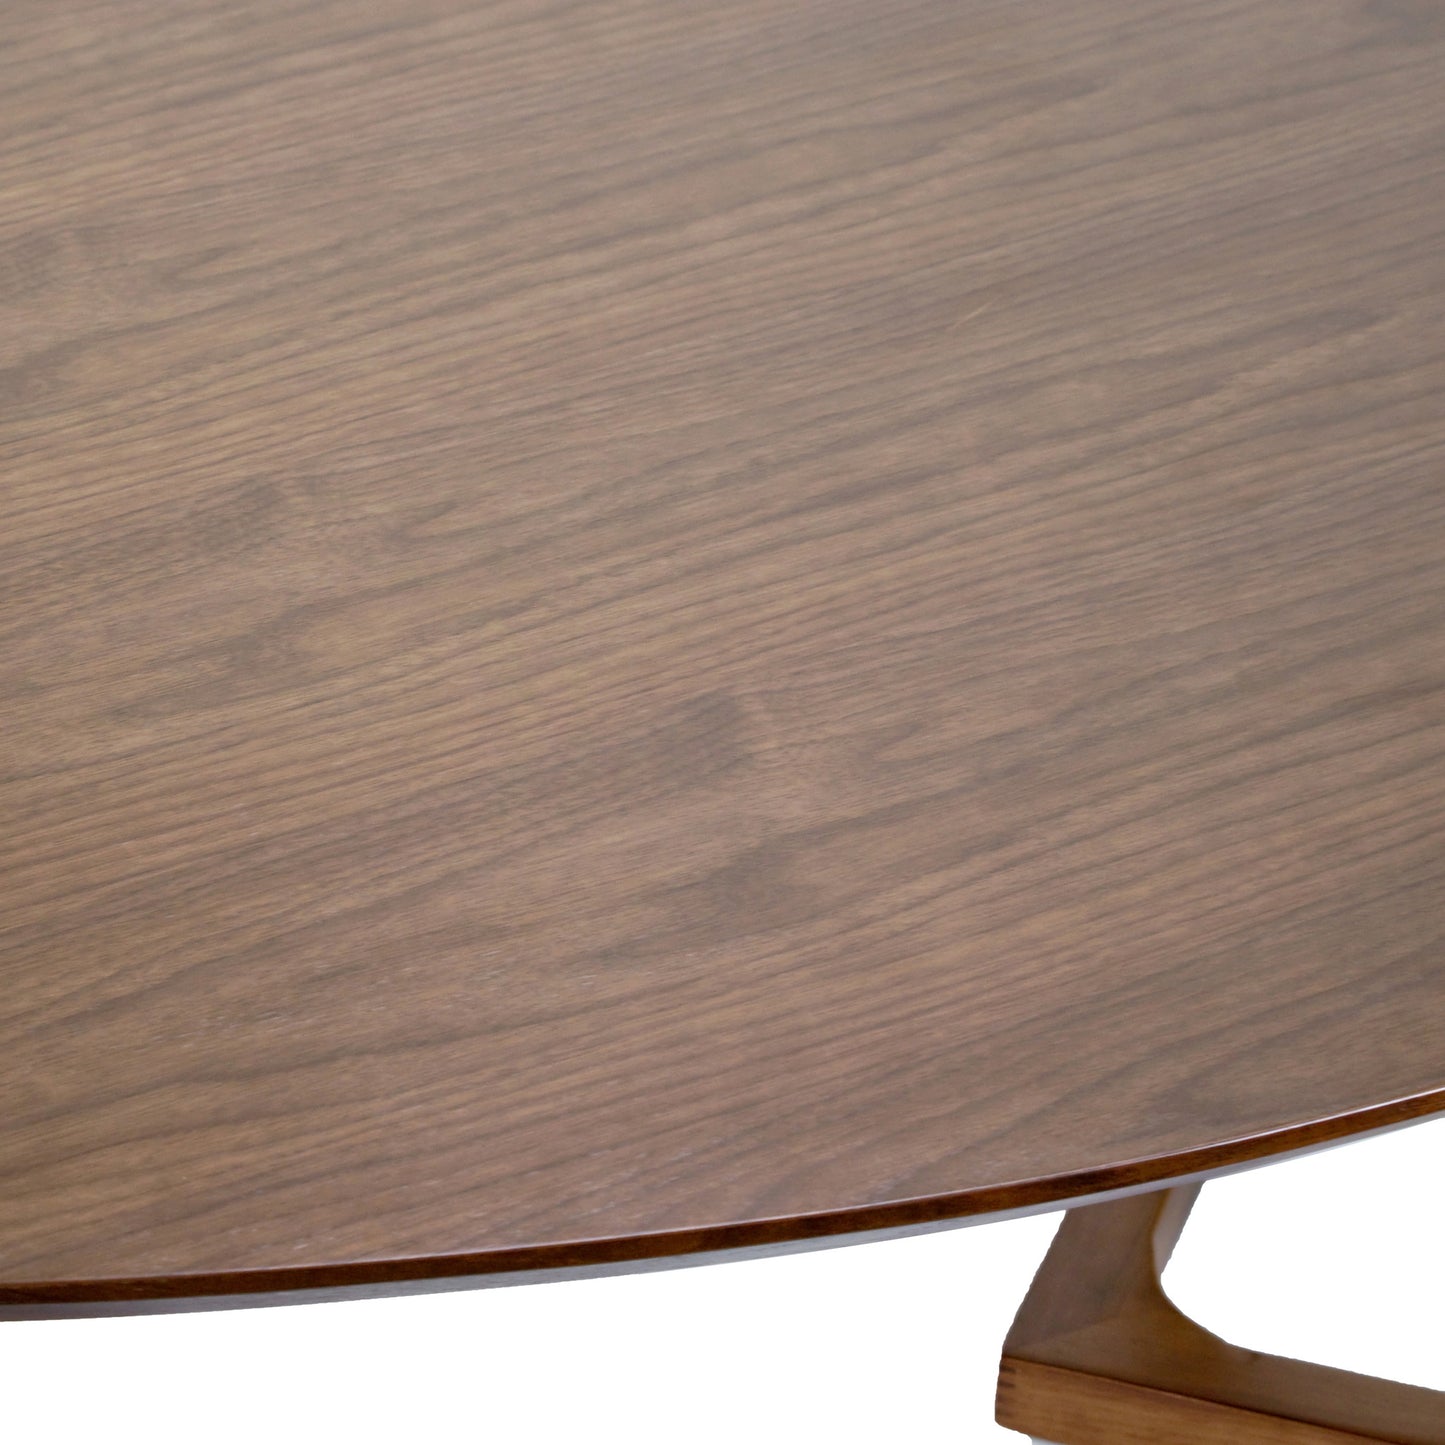 Ailsa Walnut Color Irregular Oval Round Coffee Table